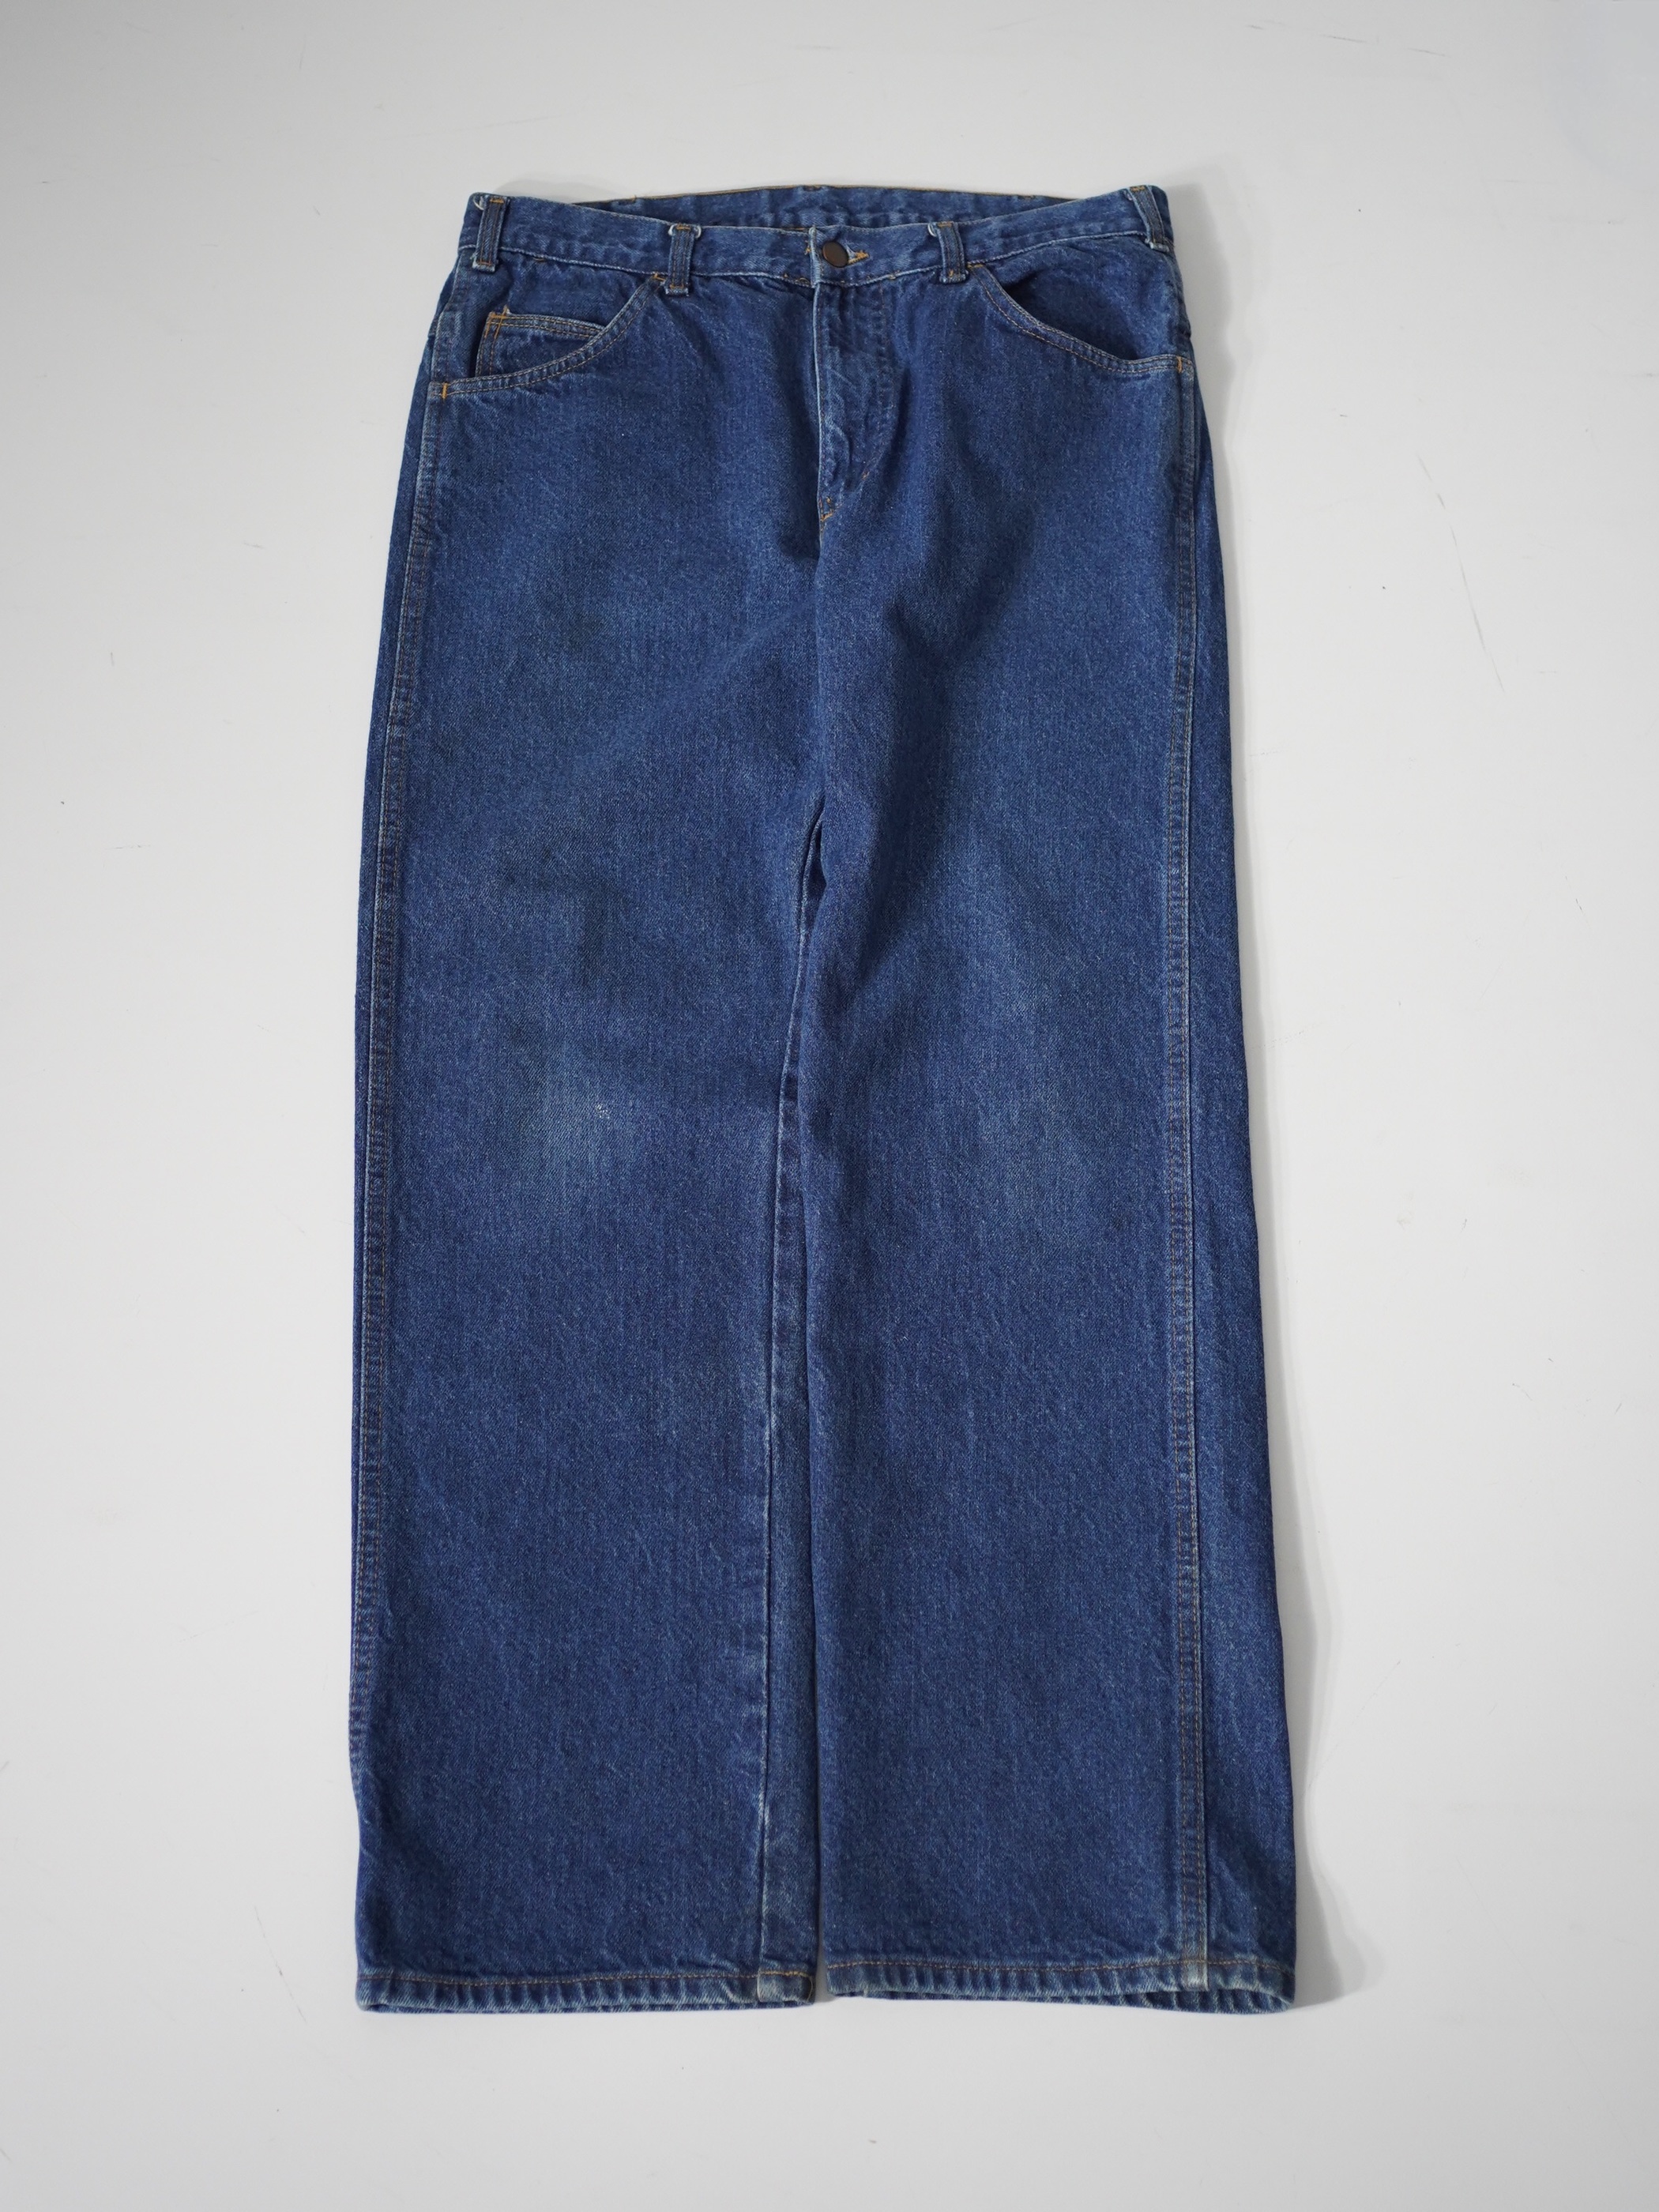 1990's Straight-Leg Denim pants / Made in USA